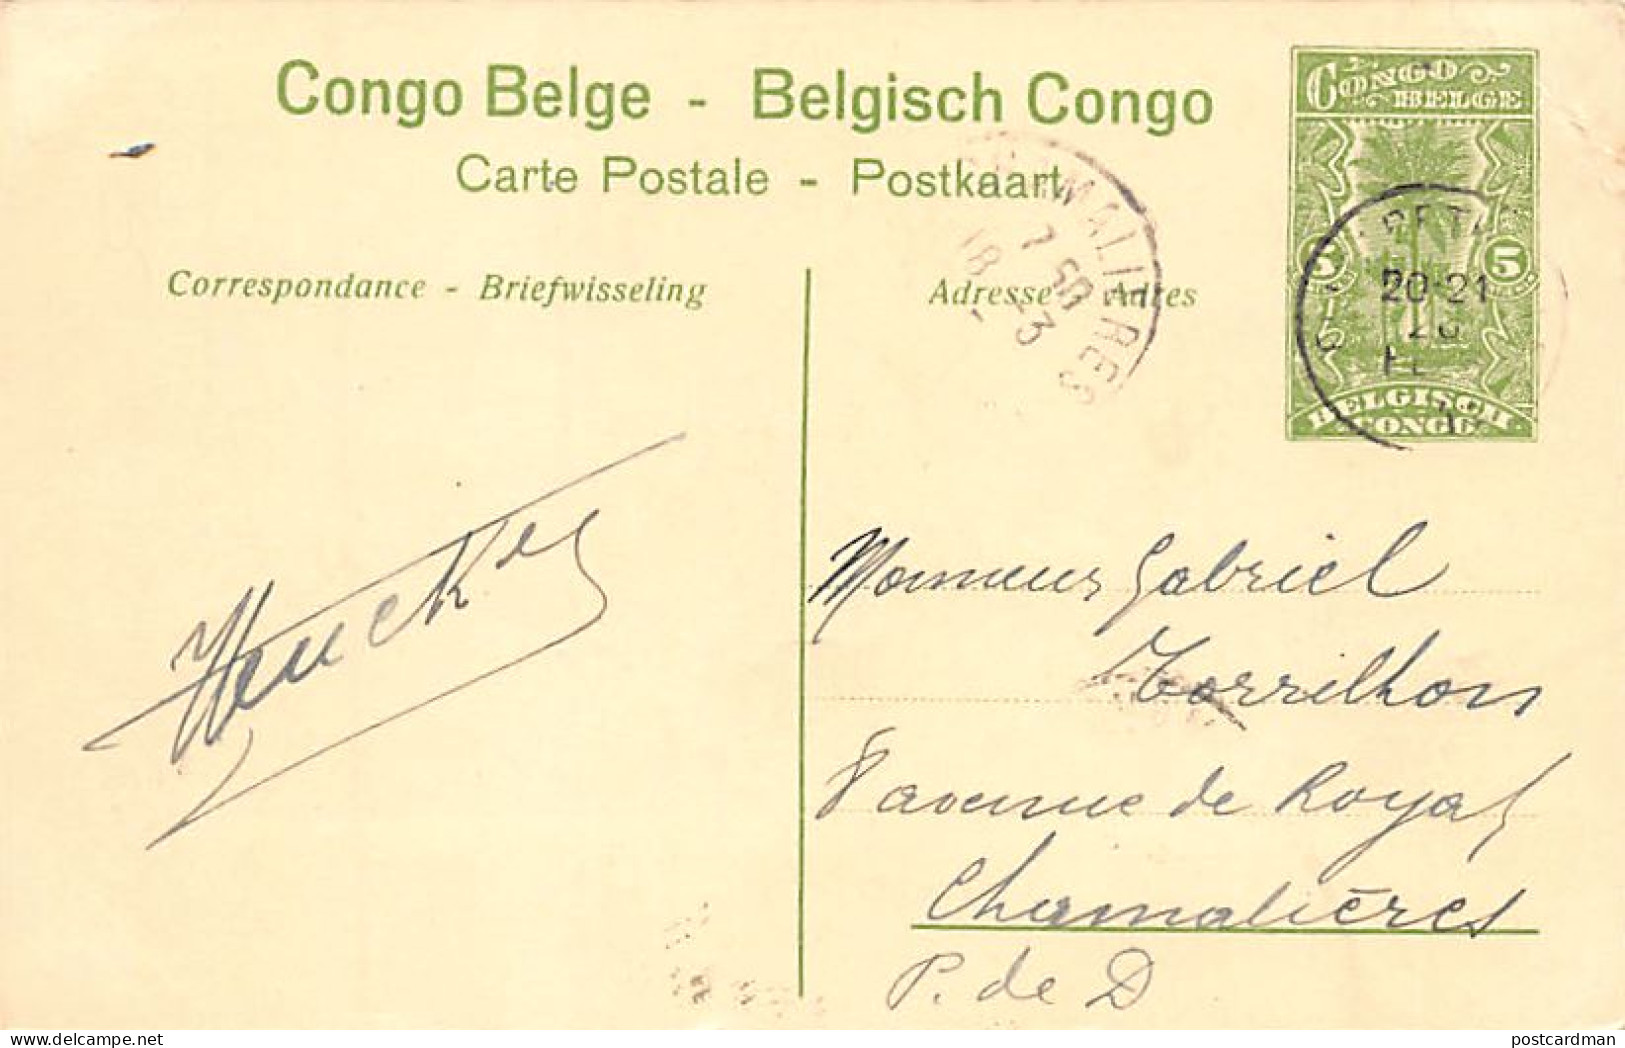 Congo Kinshasa - KATANGA - Indigènes Nivelant Une Termitière - Entier Postal 5 Centimes - Ed. Congo Belge 5 - Congo Belga